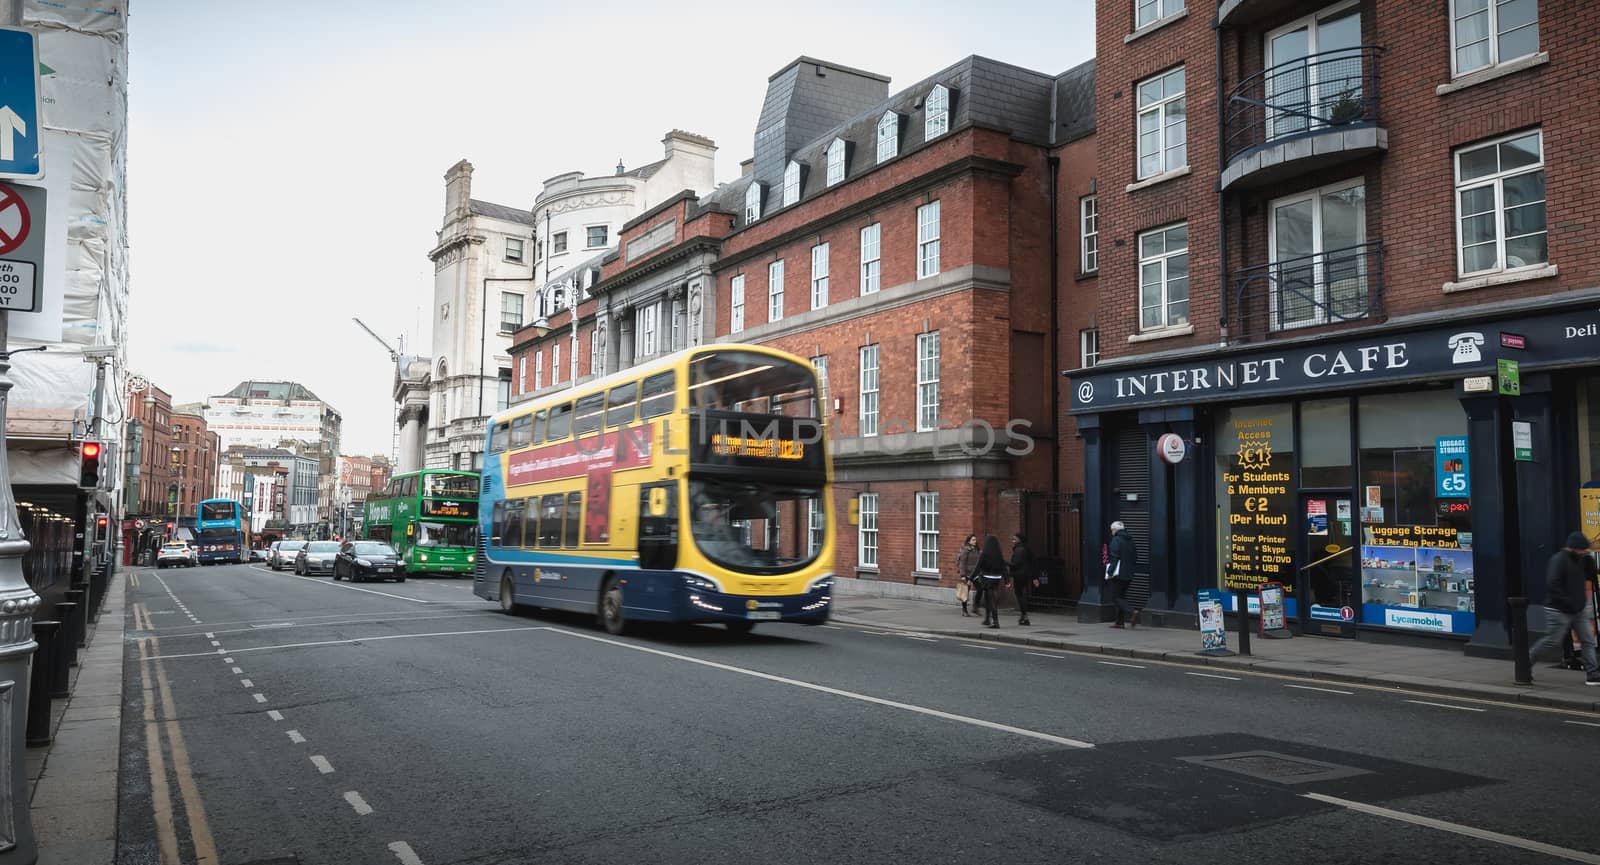 Irish Typical bus traveling down Dublin, ireland by AtlanticEUROSTOXX